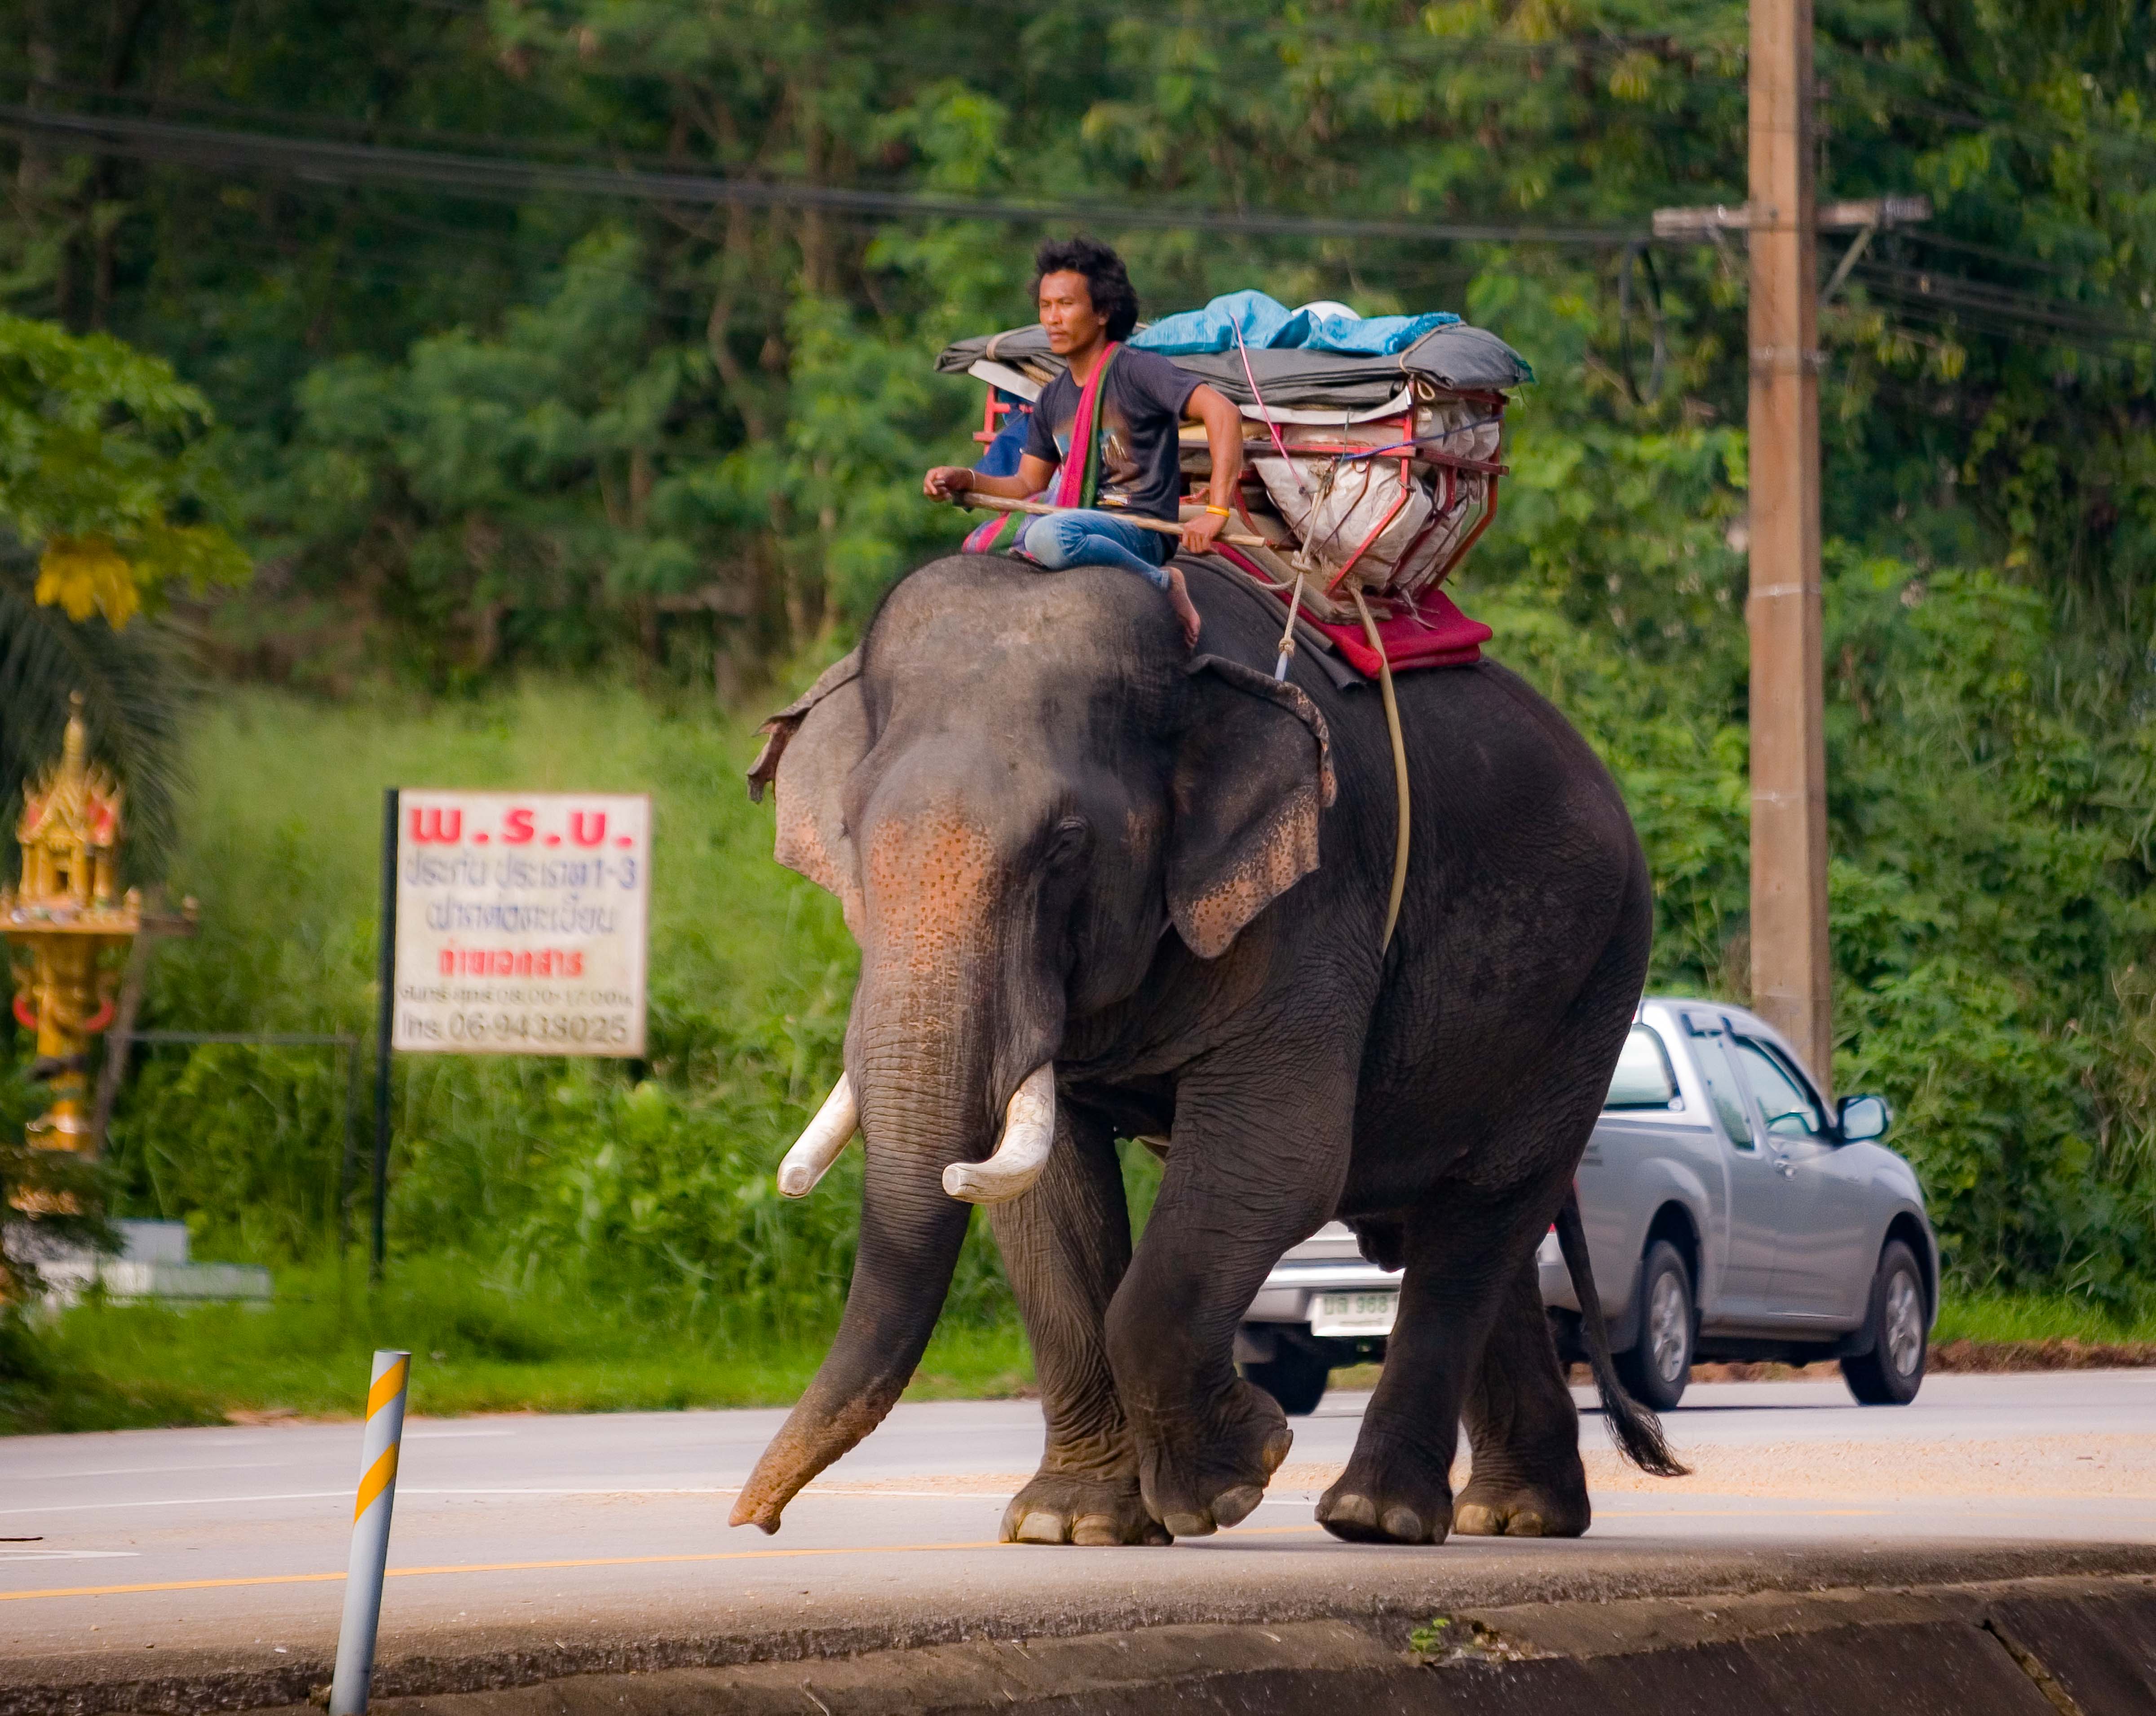 Thailand, Chumphon Prov, Elephant and Rider, 2008, IMG 1411